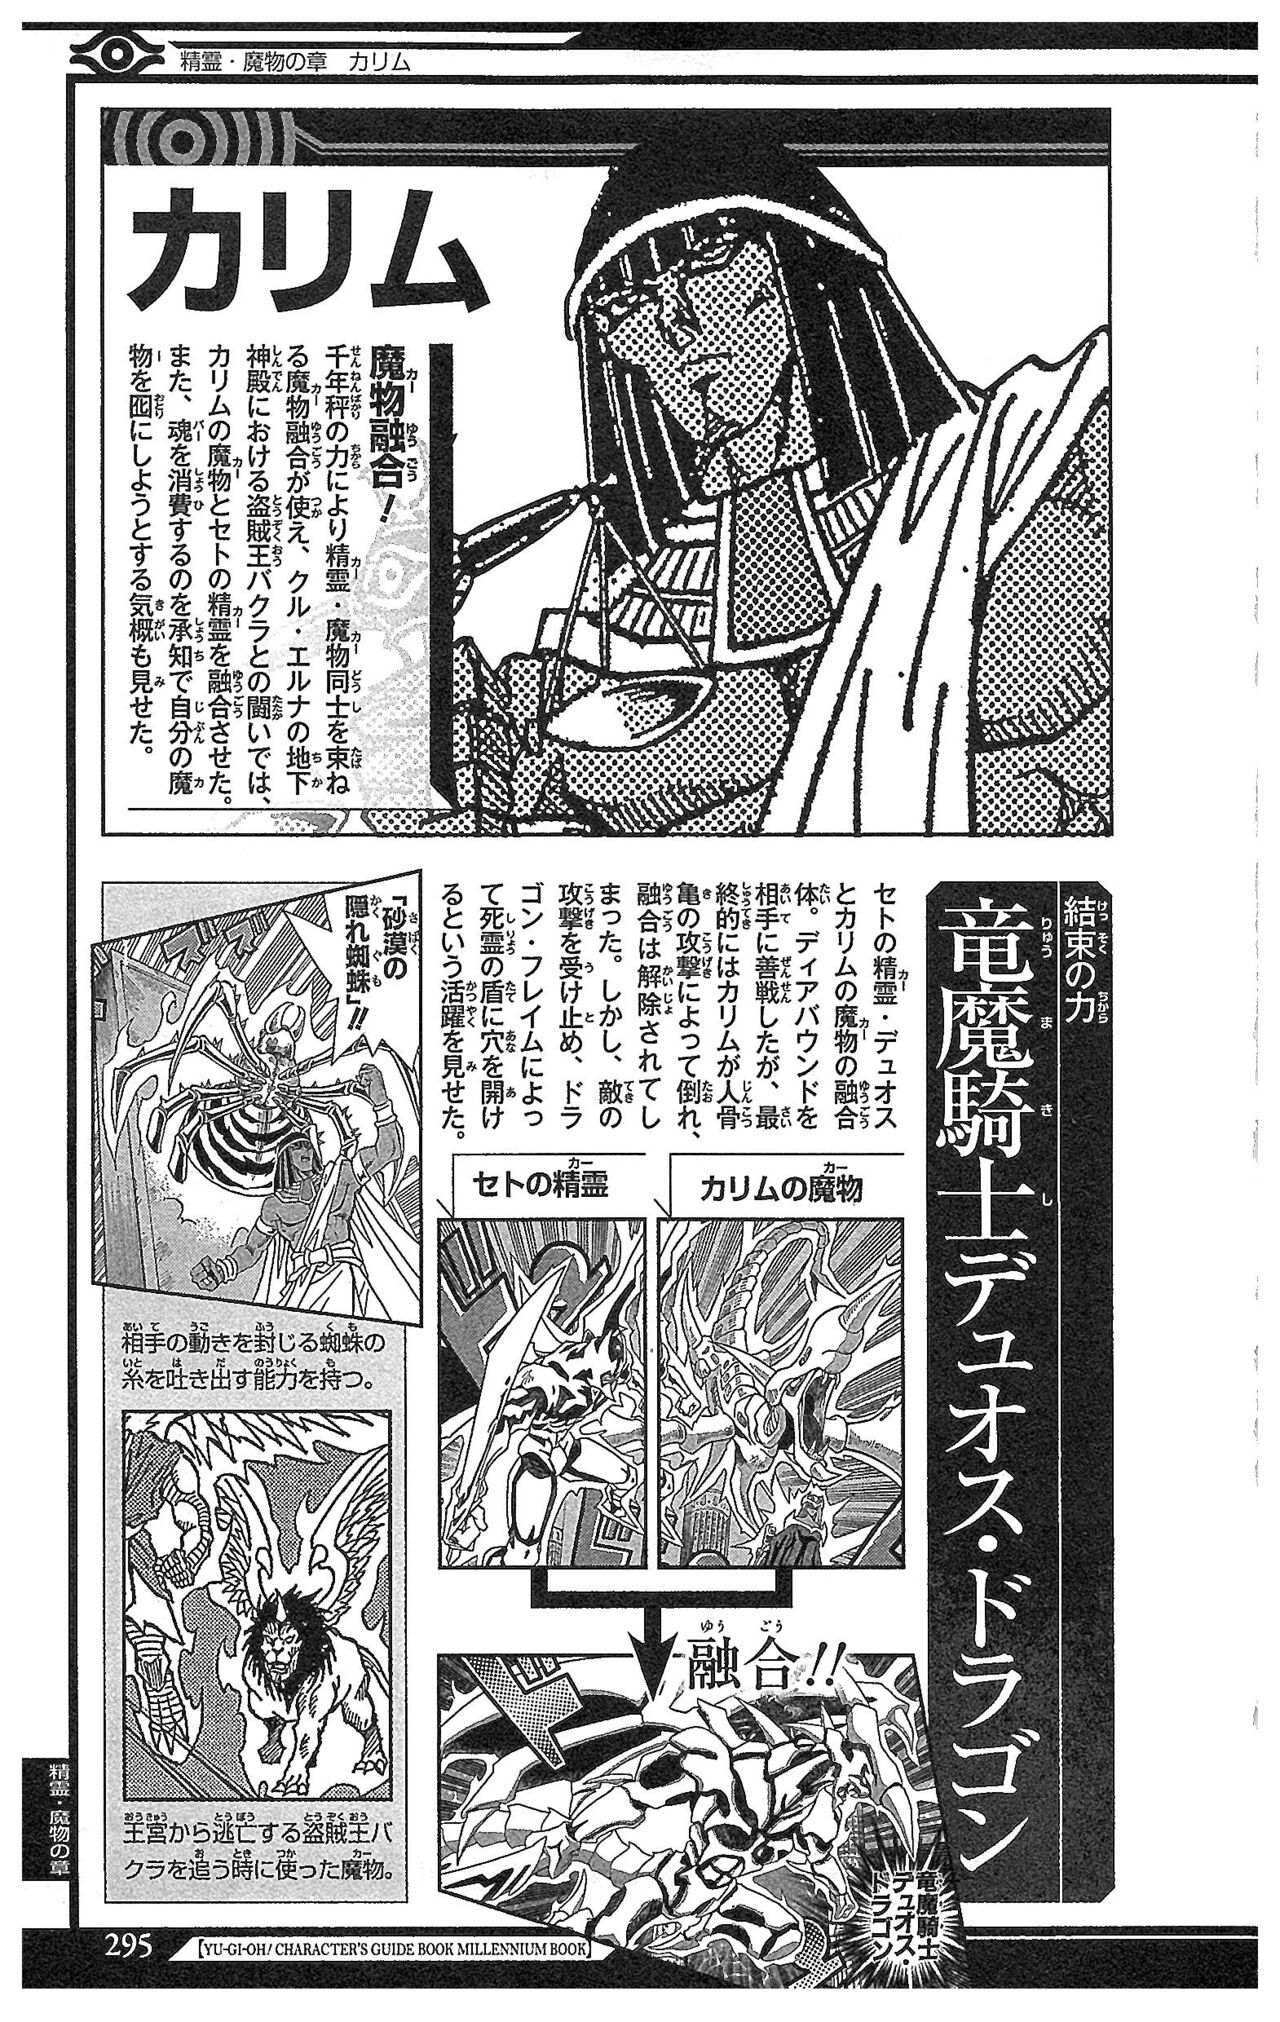 Yu-Gi-Oh! Character Guidebook: Millennium Book 291